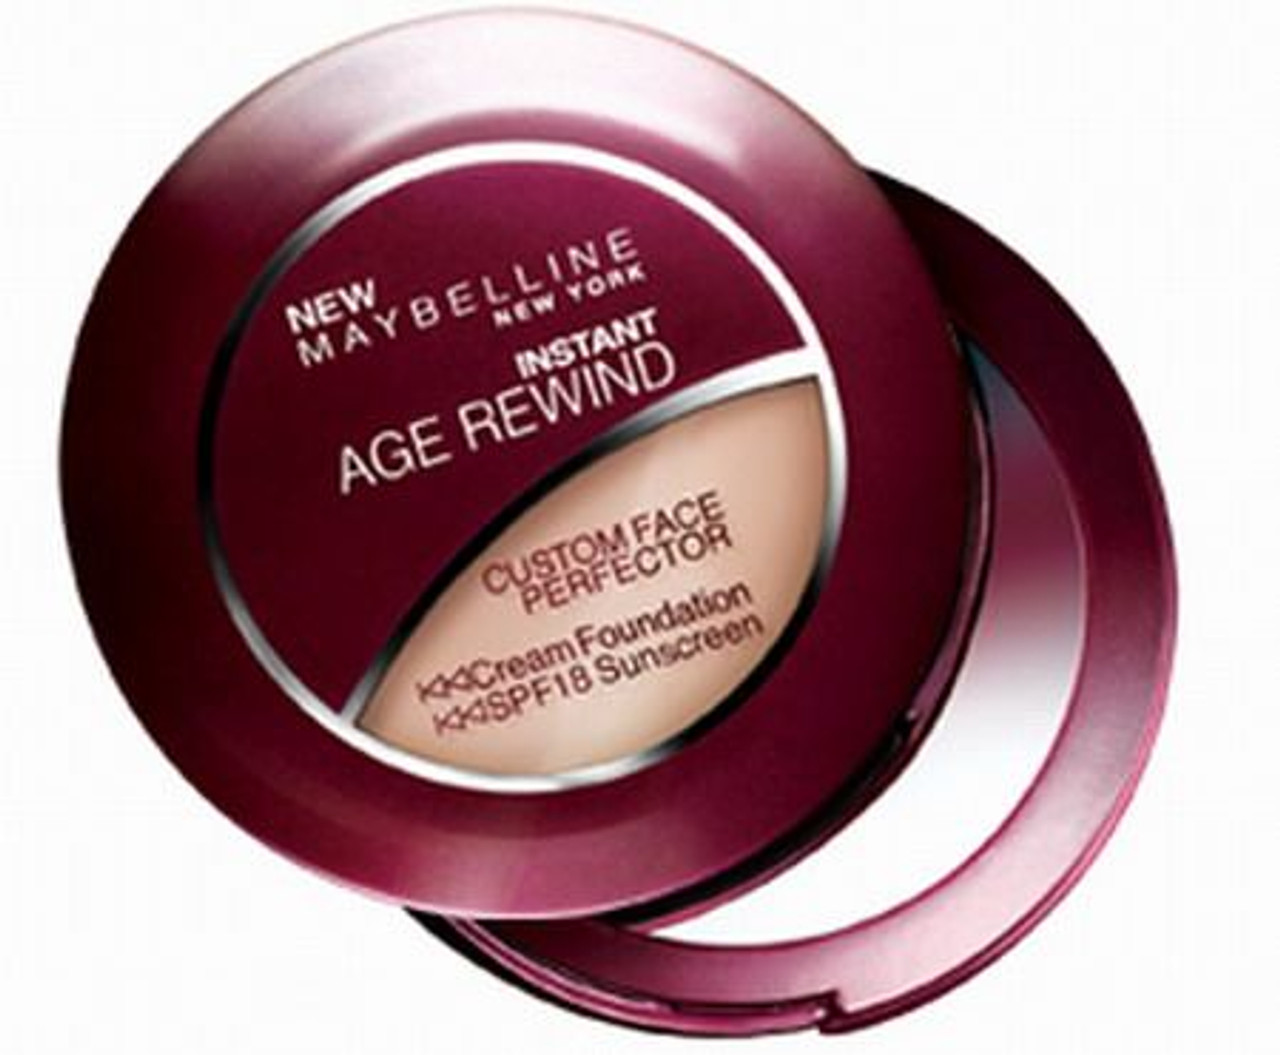 Maybelline Instant Age Rewind Custom Face Perfector Cream 